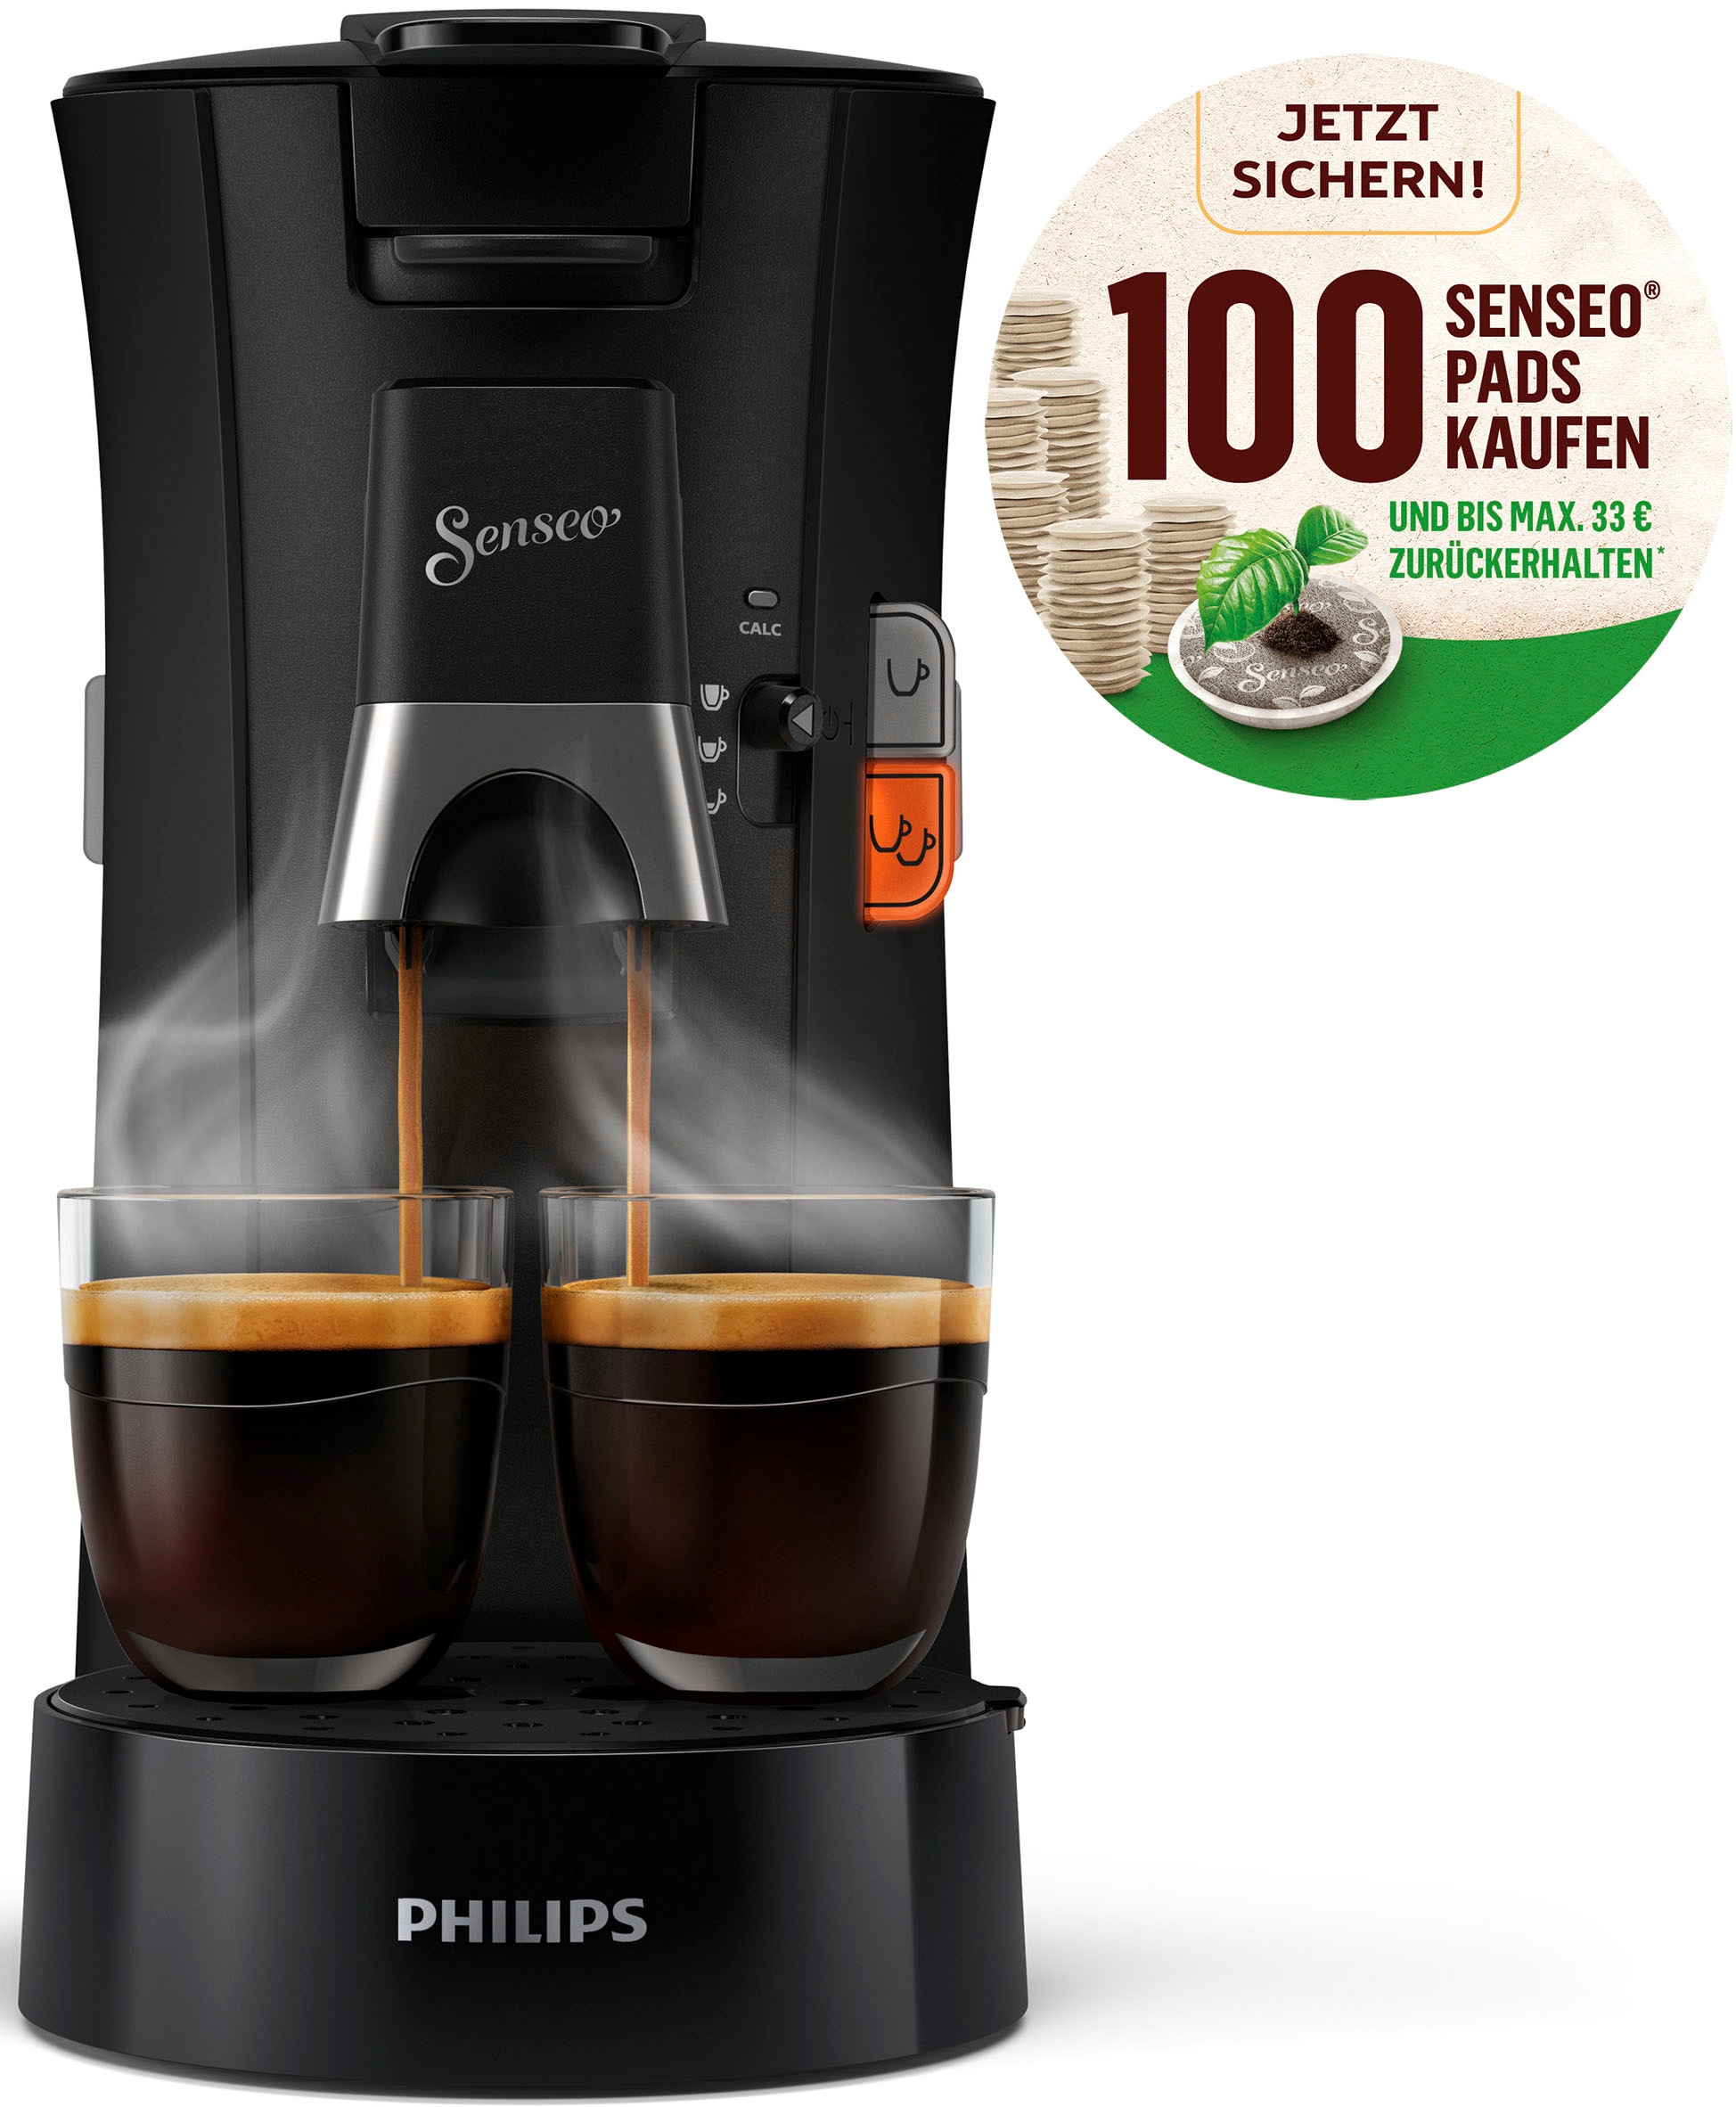 Philips Senseo Kaffeepadmaschine "Select CSA230/69, aus 21% recyceltem Plastik", Crema Plus, 100 Senseo Pads kaufen und 